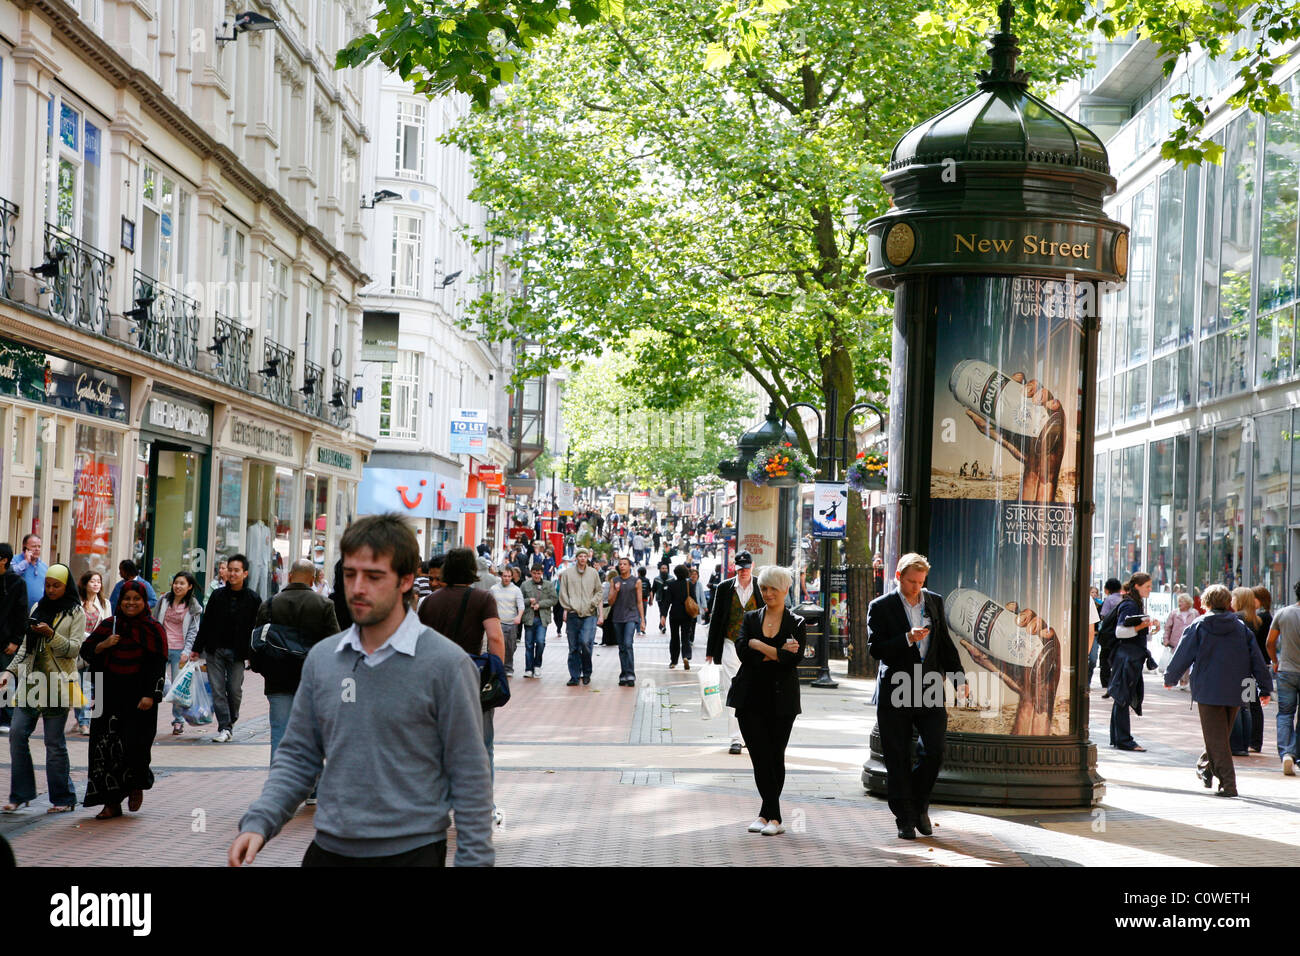 People walking down New Street, a pedestrian street with many shops. Birmingham, England, UK. Stock Photo